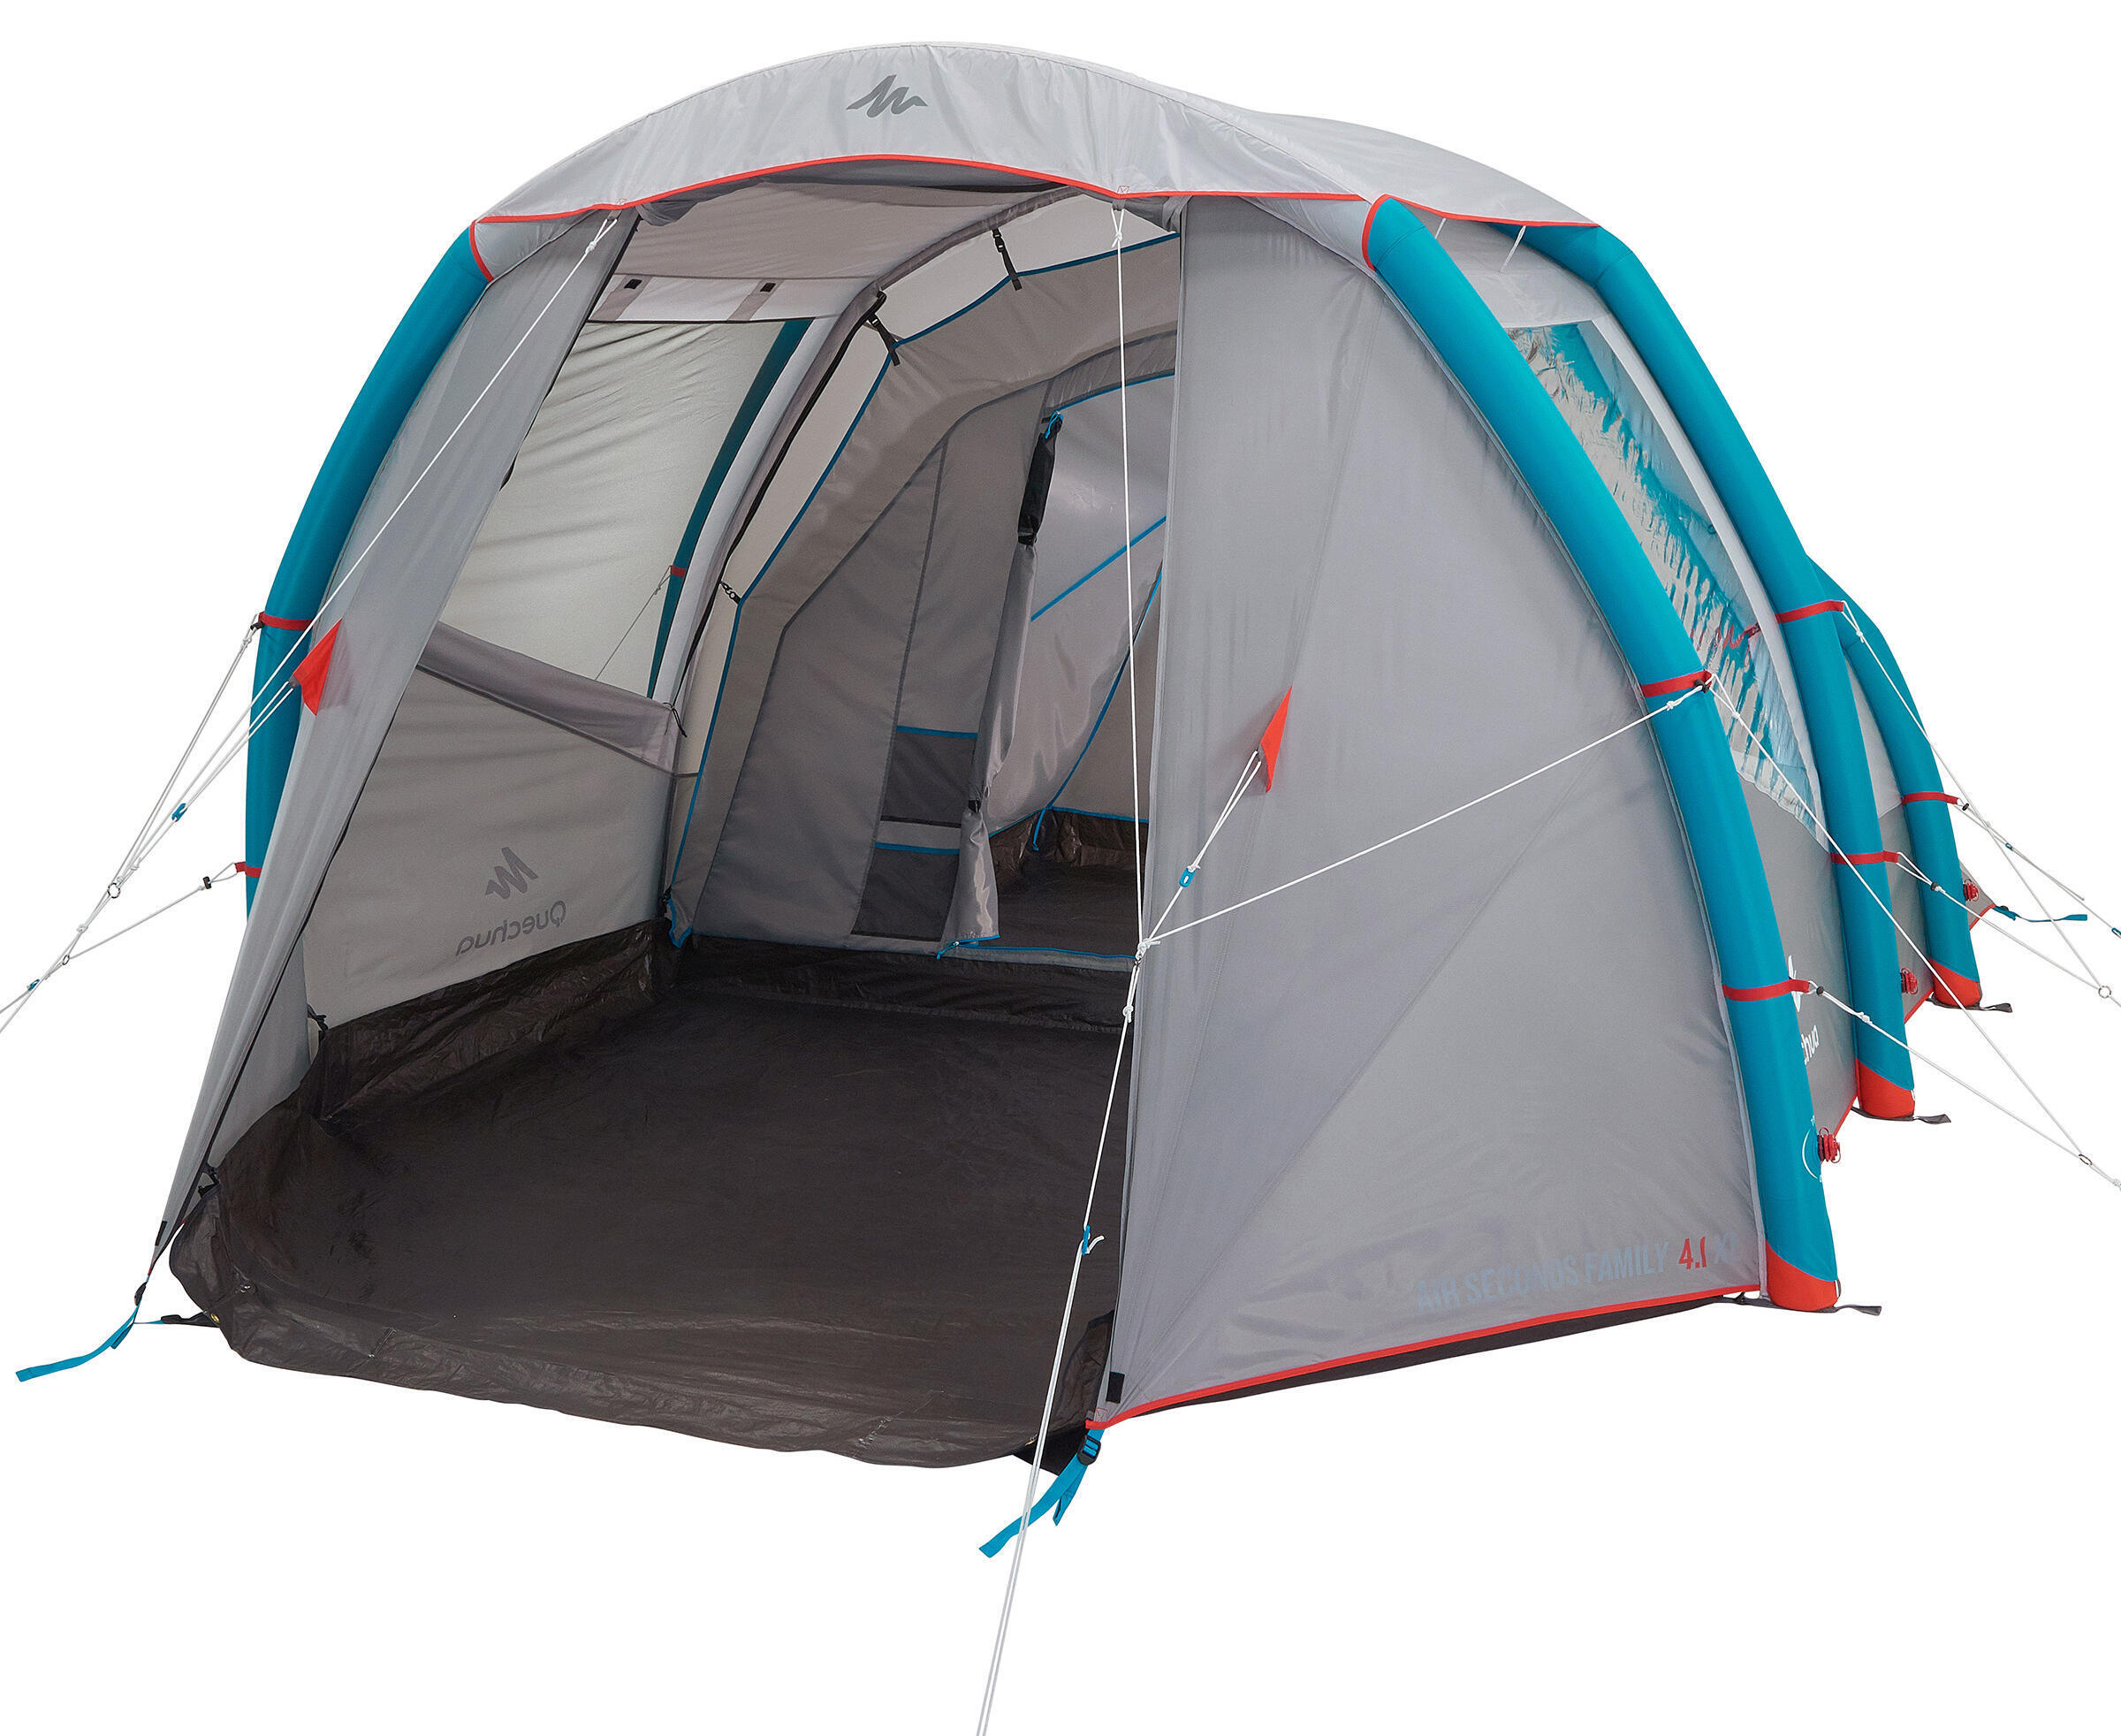 Air Seconds 4.1 tent